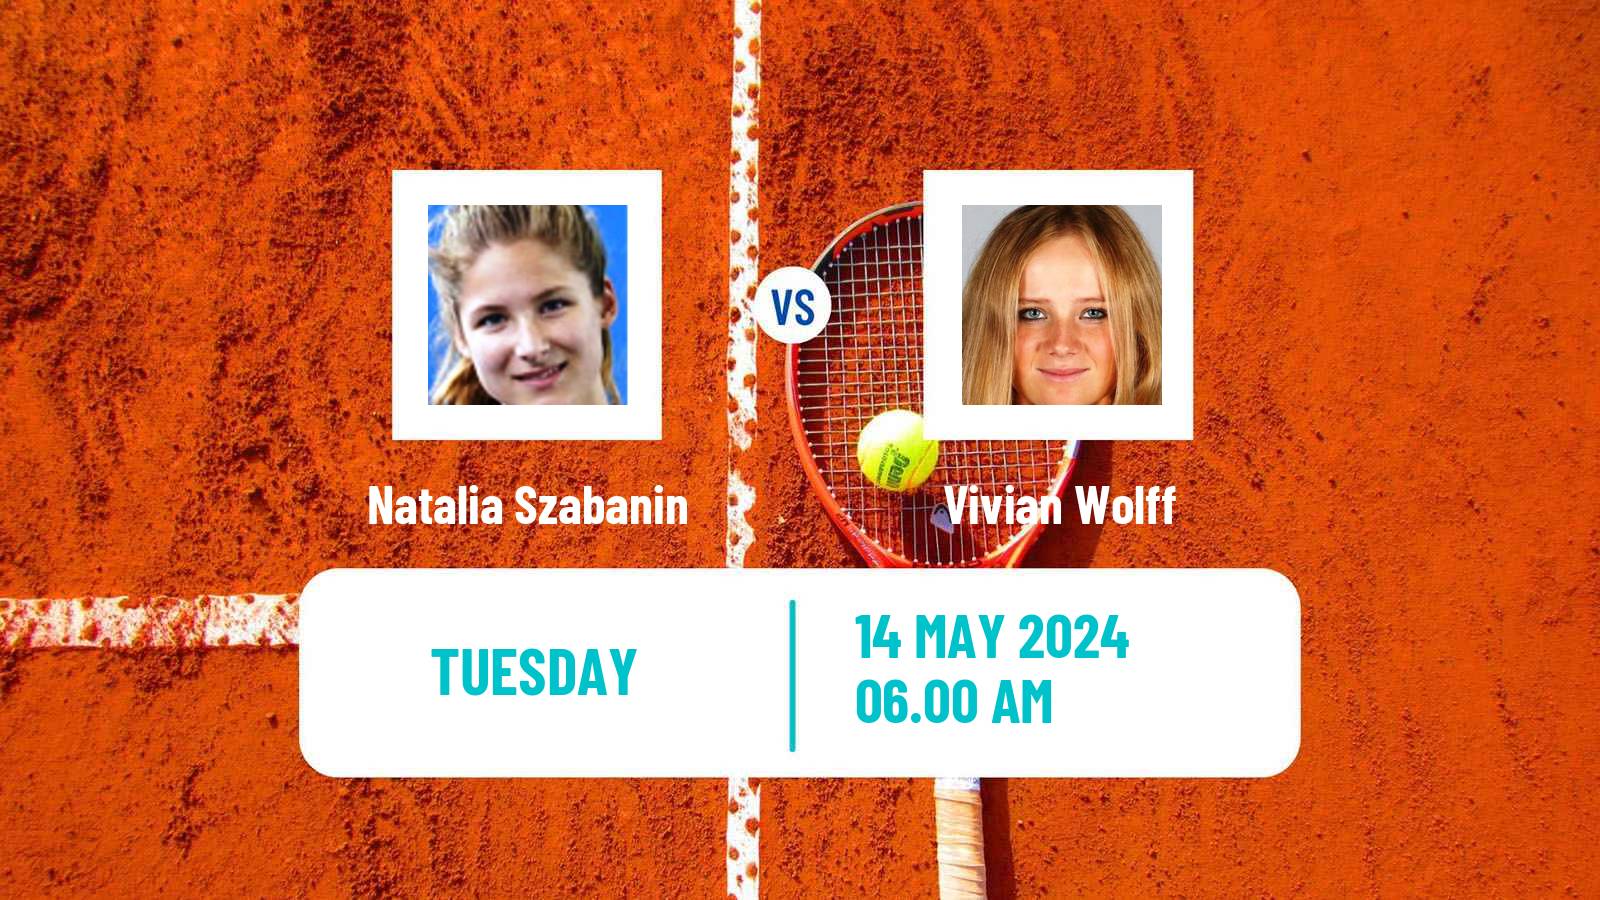 Tennis ITF W35 Villach Women Natalia Szabanin - Vivian Wolff